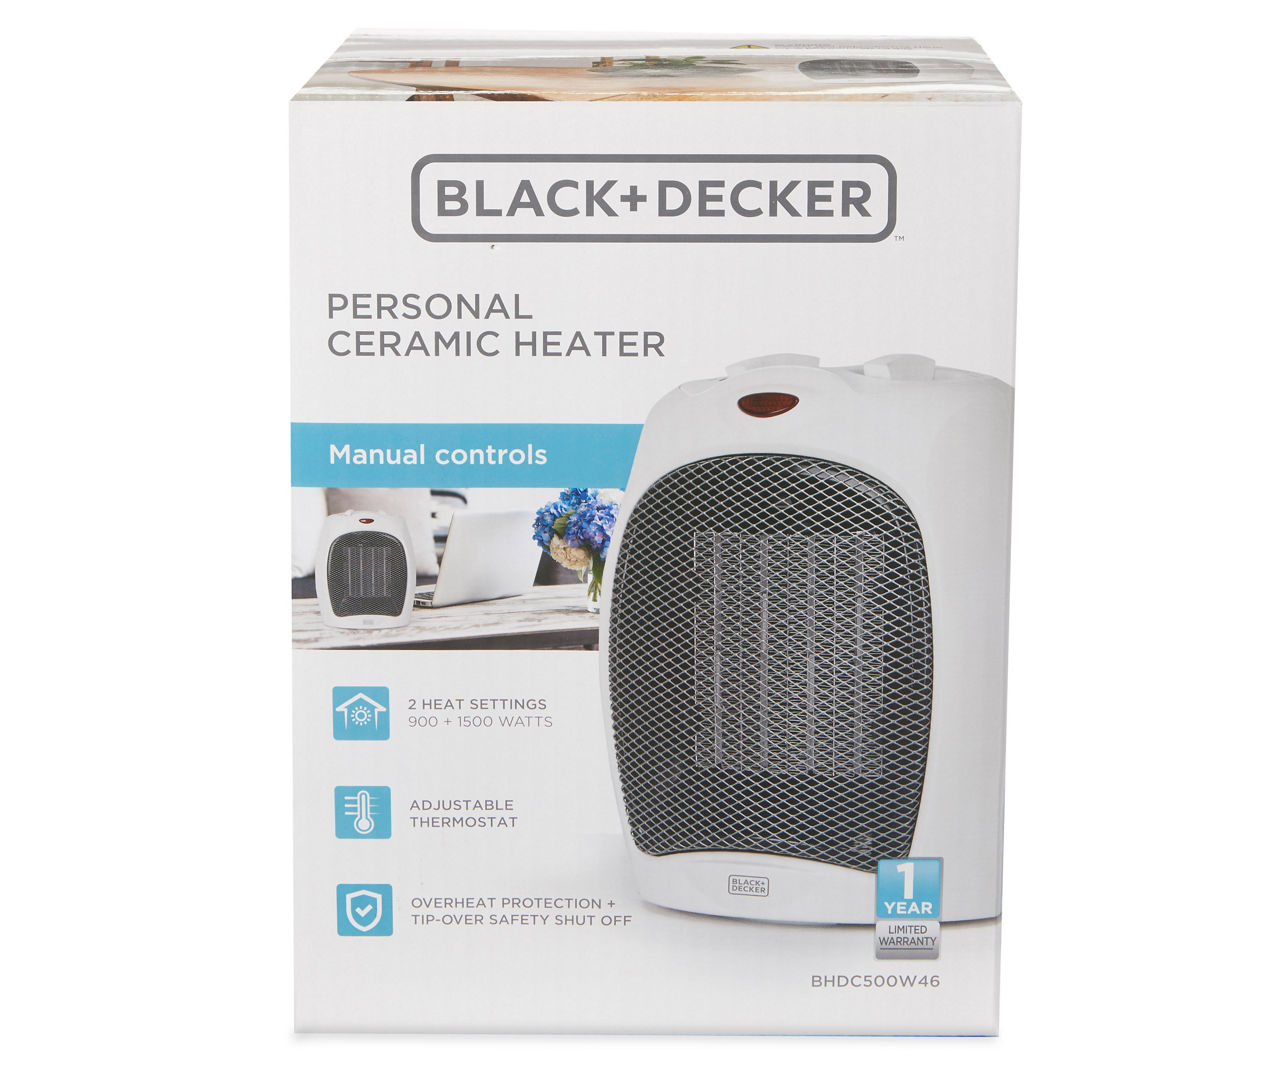 Black + Decker White Personal Ceramic Heater